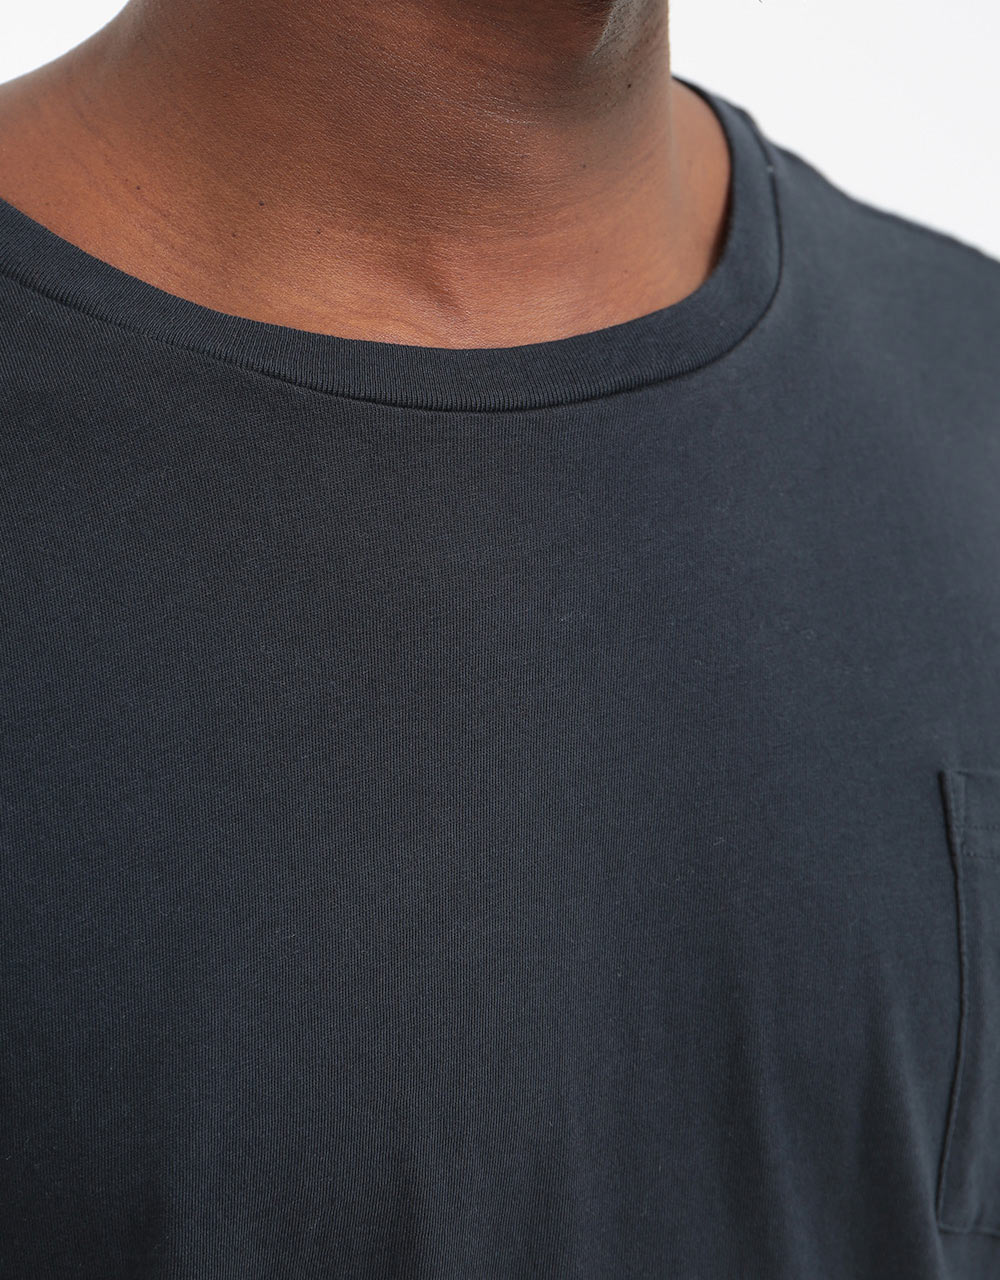 Anon Logo L/S Pocket T-Shirt - True Black